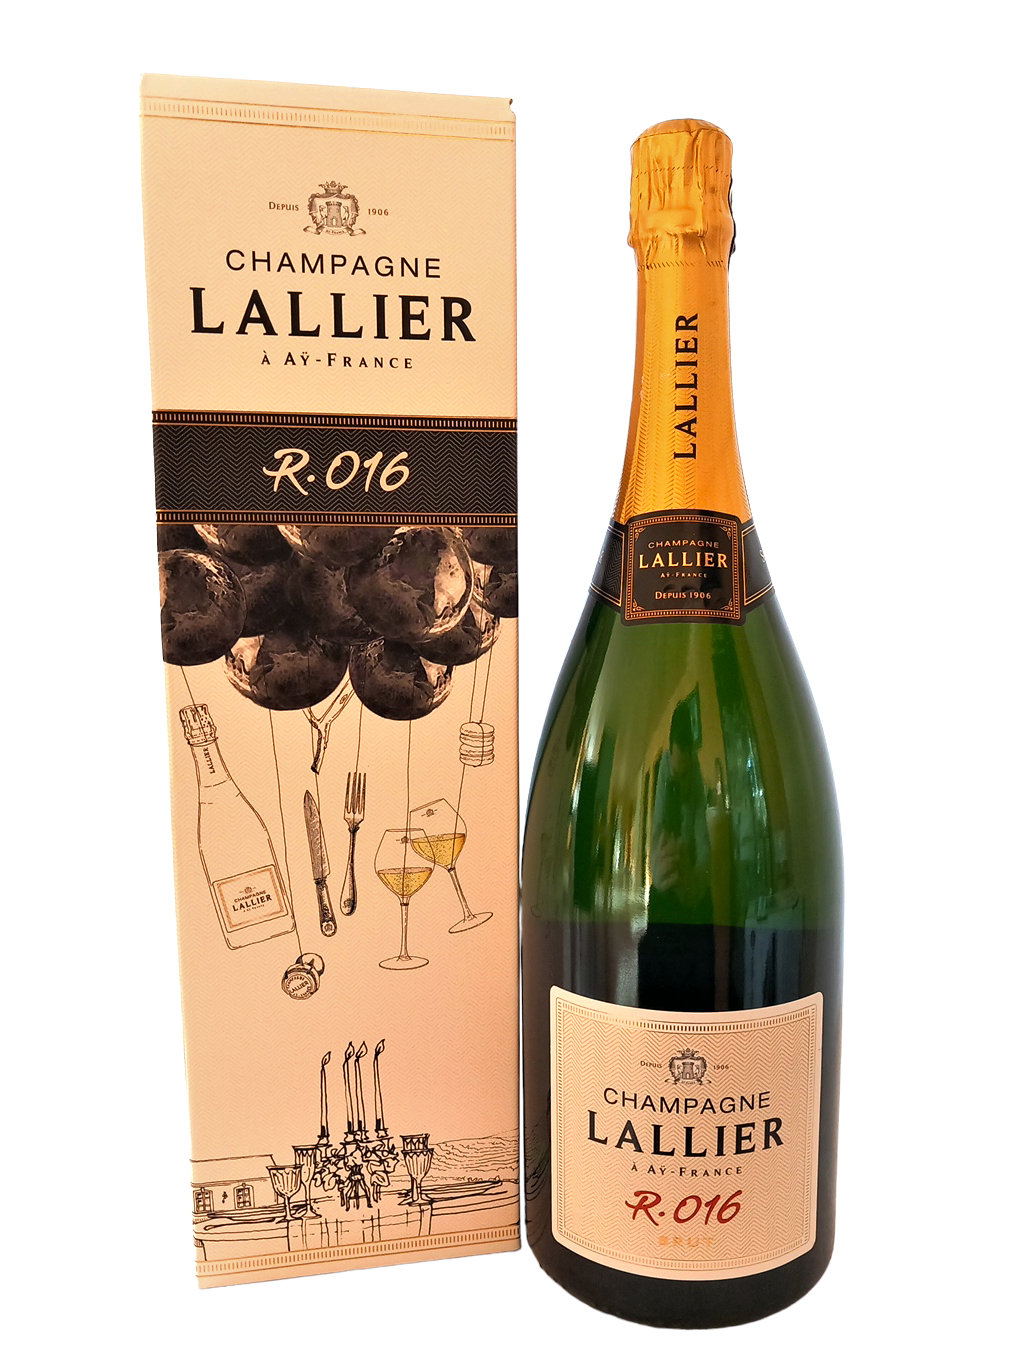 Magnum Champagne Lallier R 016 Brut 12.5% 1.5L + etui